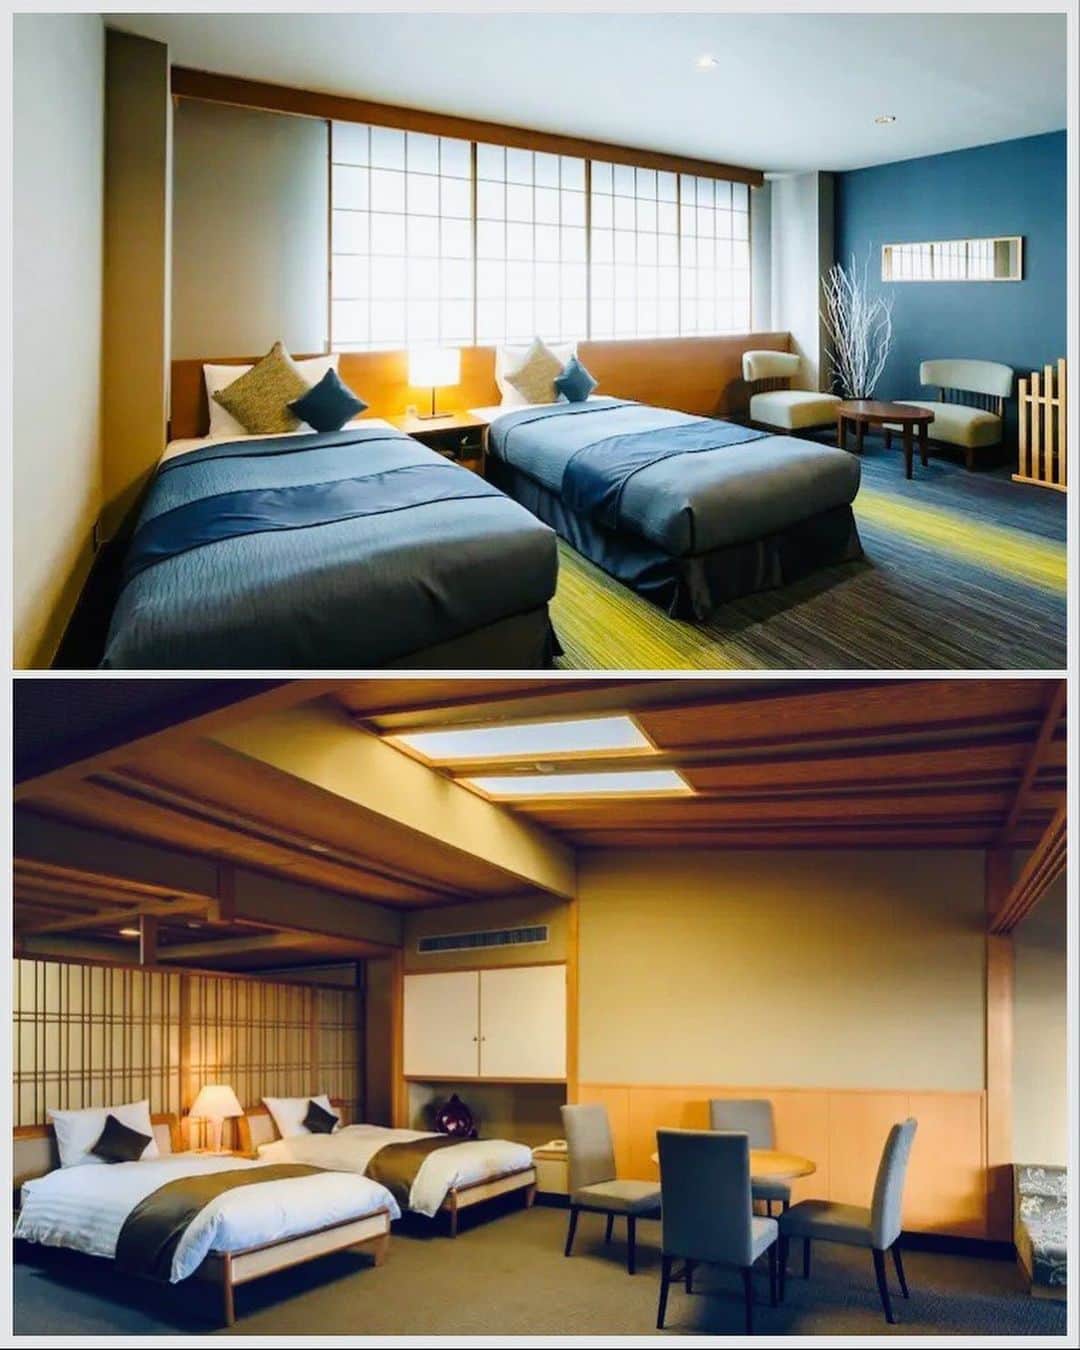 JAPAN TRIP 大人旅〜厳選の宿〜さんのインスタグラム写真 - (JAPAN TRIP 大人旅〜厳選の宿〜Instagram)「．@hoteltokiwa 緑に囲まれ、文化的な魅力があふれる甲府の迎賓館。  日本建築の粋を集めた趣き溢れる個性豊かな離れが11室。他にも様々なタイプの客室が用意されいます。温泉はゆったり長湯ができる最適な温度。庭園を眺めながら露天風呂でリラックスできます。  ＝DATA＝＝＝＝＝＝＝＝＝＝＝＝＝＝＝＝＝ 📍信玄の湯　湯村温泉　常磐ホテル @hoteltokiwa  ■ 山梨県甲府市湯村2-5-21 ■ 50室 ■ IN 15:00～／OUT 11:00  ■ 2名：55,000円～（夕朝食付） ※目安料金です。料金は施設に確認ください。 ＝＝＝＝＝＝＝＝＝＝＝＝＝＝＝＝＝＝＝＝＝  🔸温泉 🔸露天風呂付客室 🔸露天風呂 🔸大浴場 🔸子供可 🔸ペット不可  ︎✈︎−−−−−−−−−−−−−−−−−−−−−−−−−−−−−✈︎ 　気になった方は保存しておくと便利です👍  　泊まったことがあれば、体験談＆感想等、 　コメント欄に書いて頂けると嬉しいです🙇‍♂️ ✈︎−−−−−−−−−−−−−−−−−−−−−−−−−−−−−✈︎  #おすすめホテル #山梨旅行 #湯村温泉 #温泉旅行 #温泉旅館 #露天風呂 #露天風呂付き客室 #日本庭園 #onsen #ryokan」4月18日 17時00分 - otonatabi_jpn